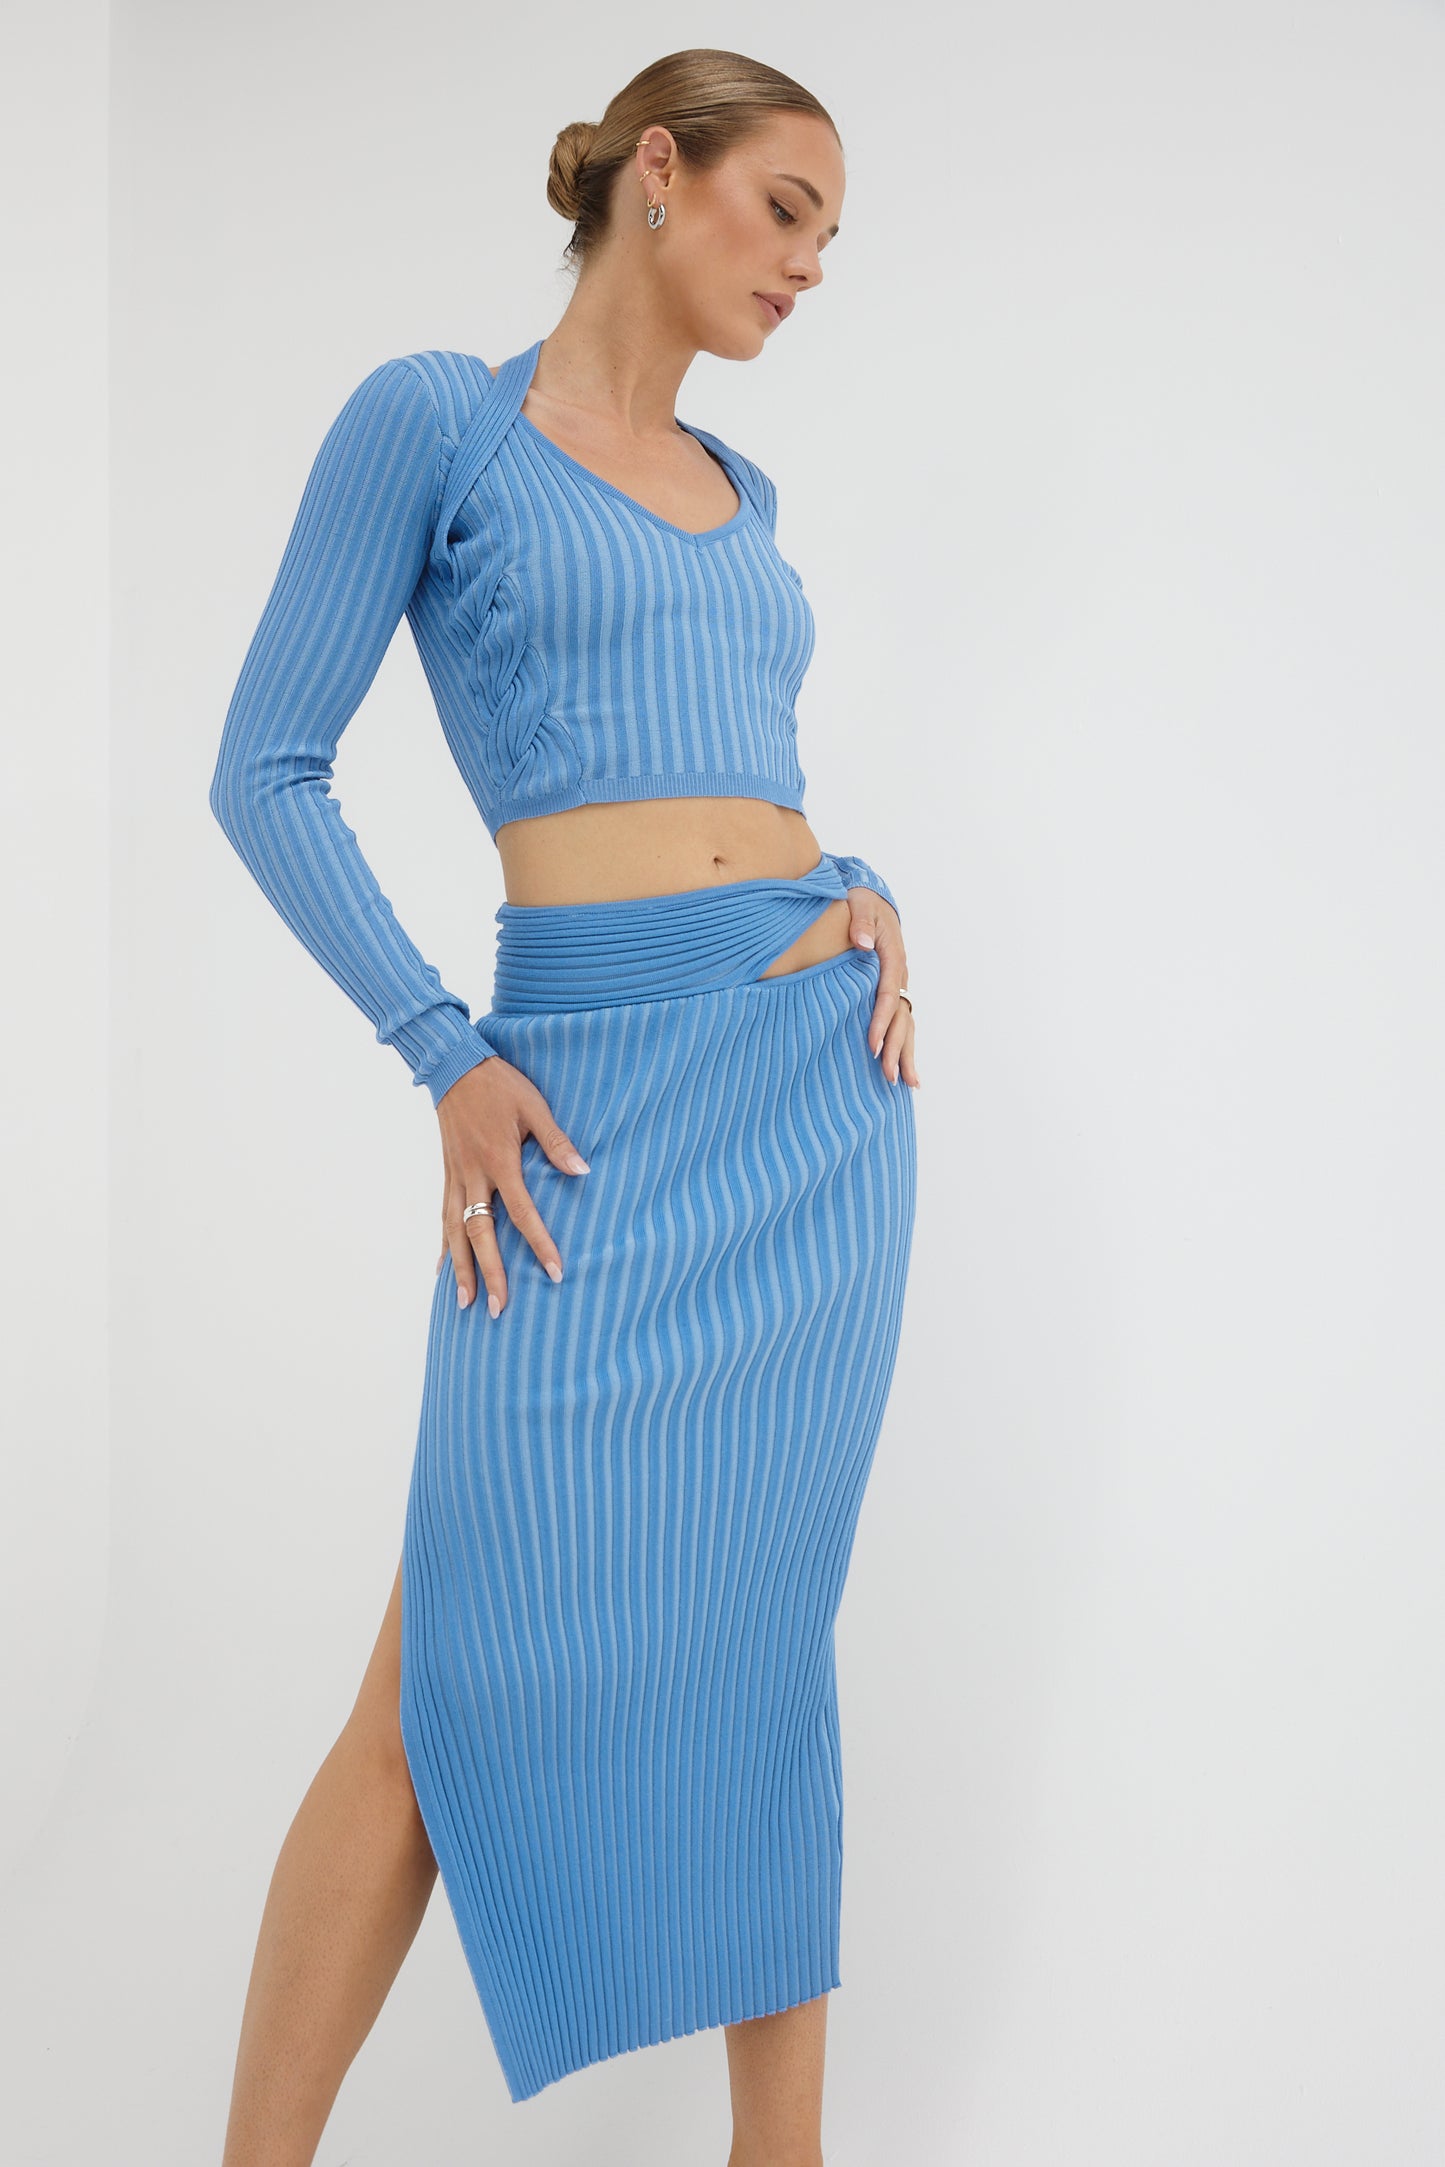 Sovere Studio women's Clothing Sydney Intwine knit Skirt Blue